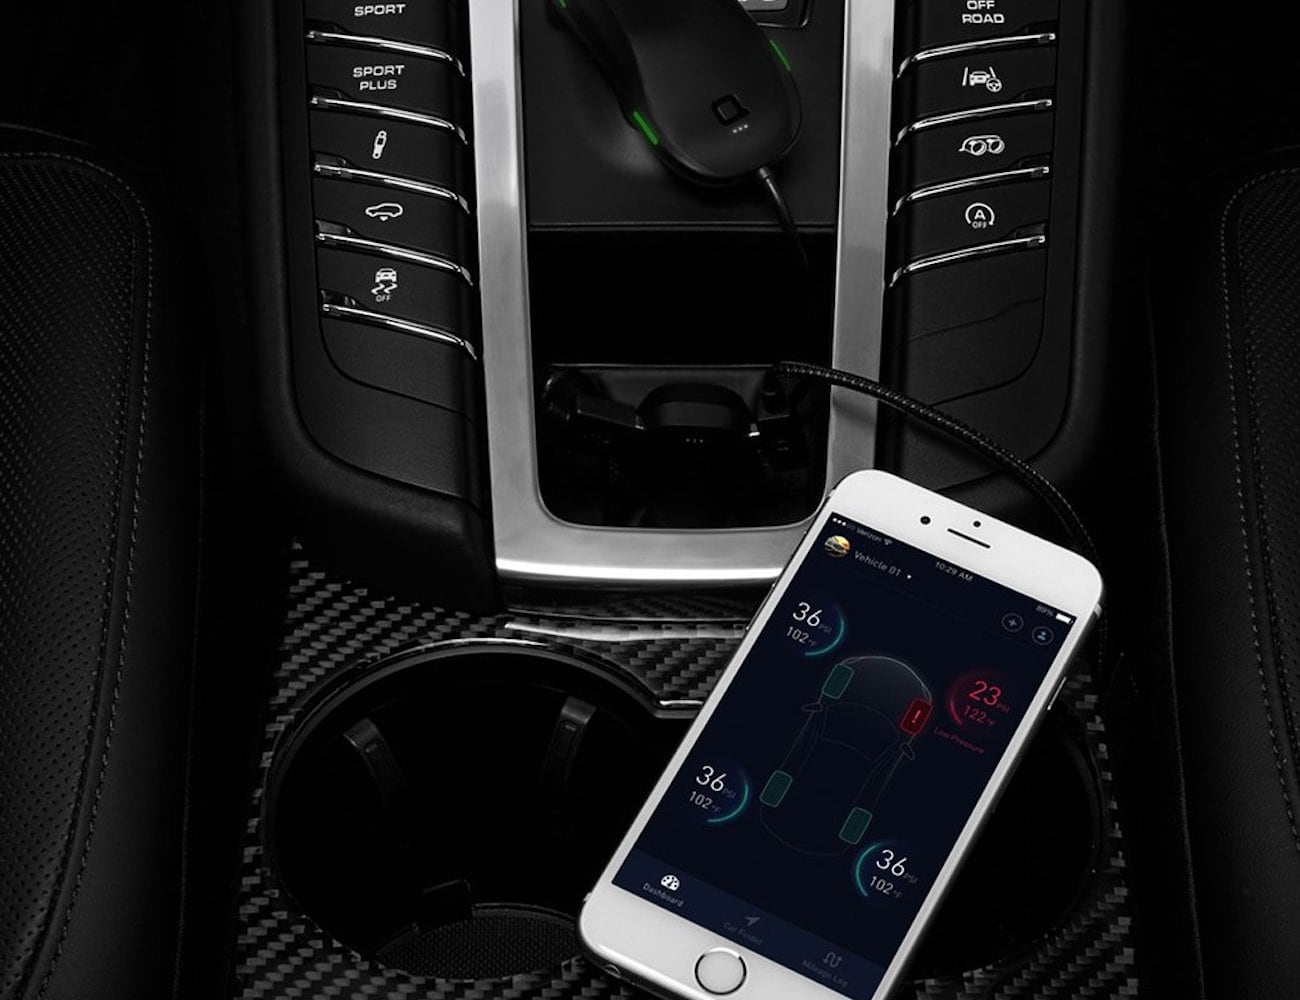 Nonda ZUS Smart Tire Safety Monitor ensures a safe drive